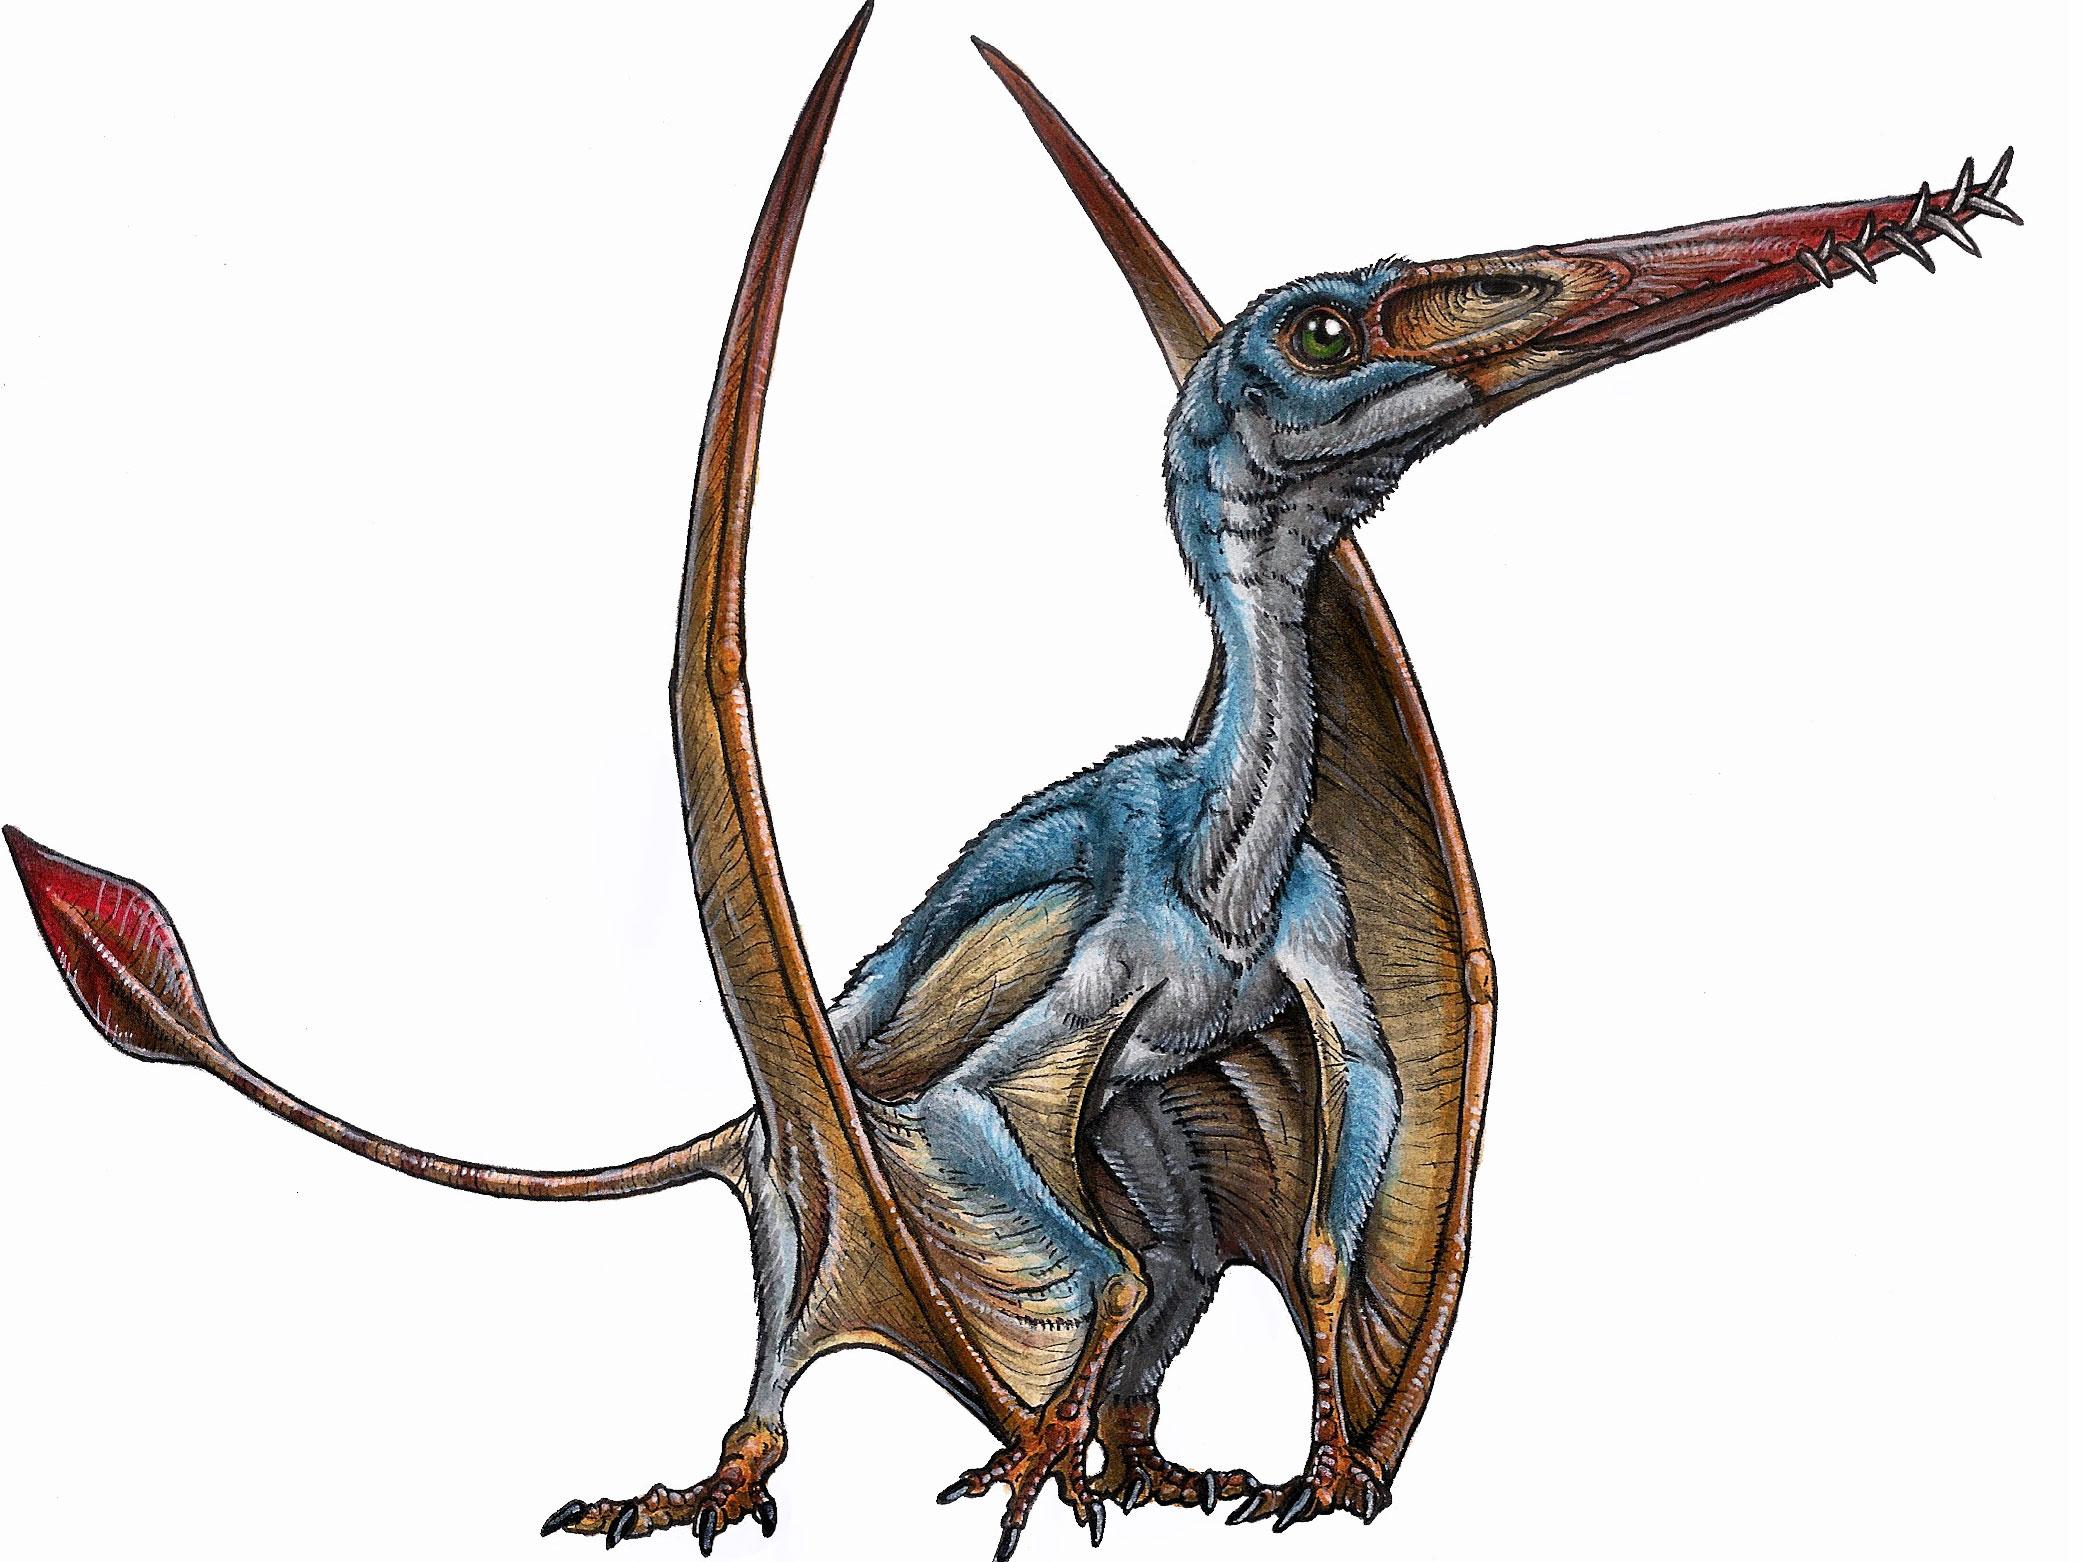 An artist's impression of a pterosaur